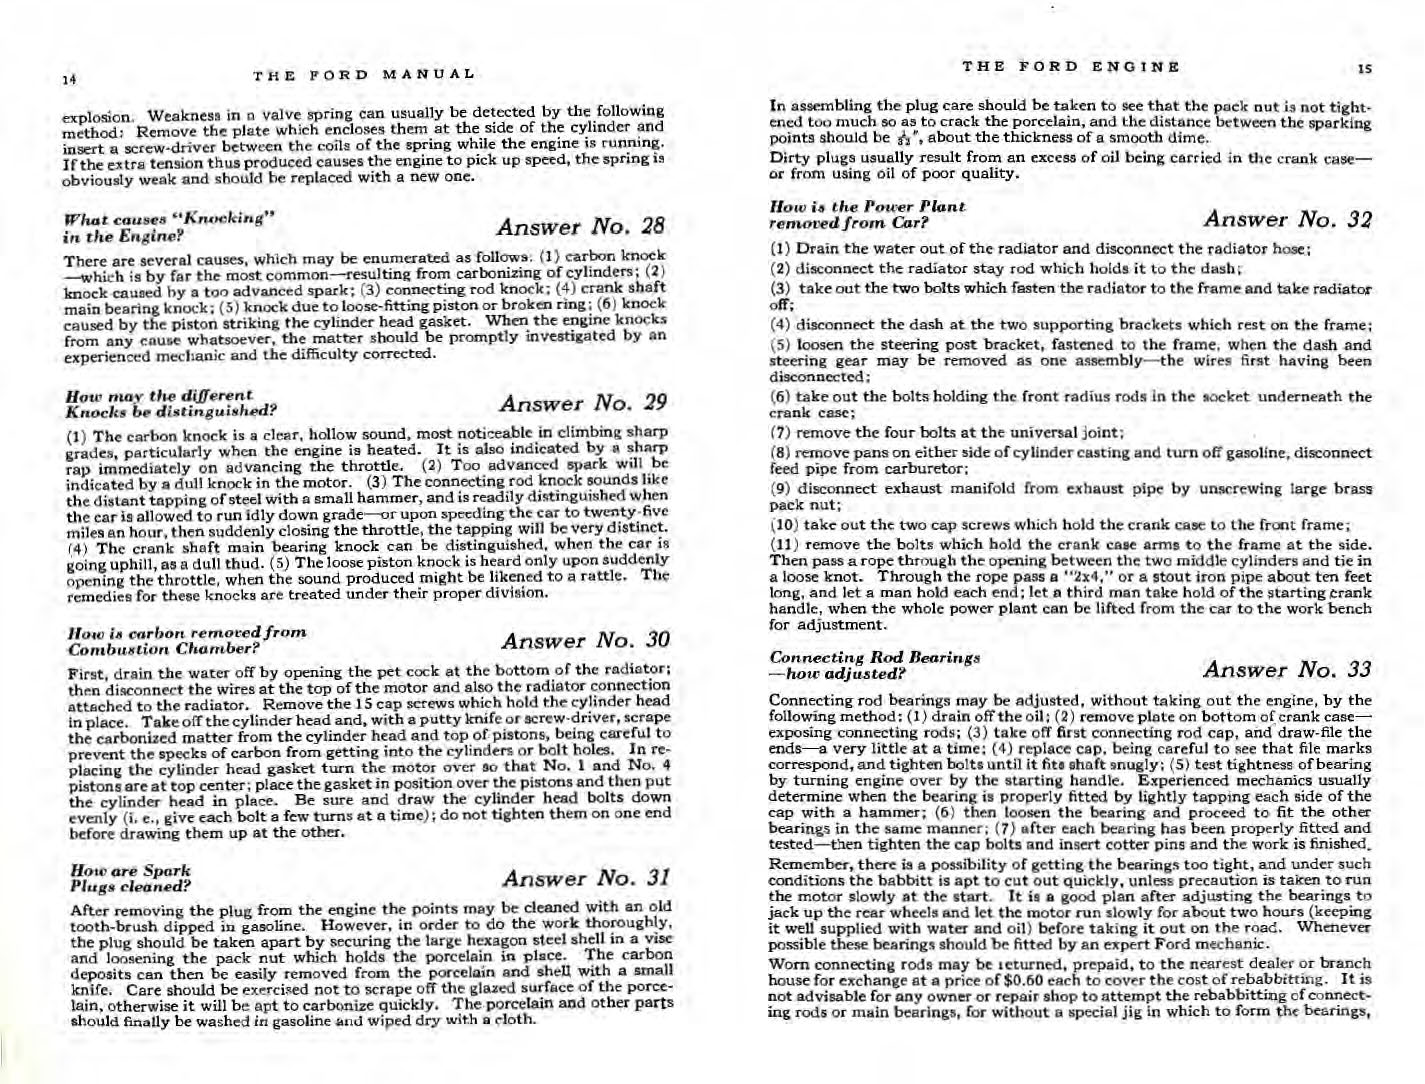 n_1922 Ford Manual-14-15.jpg